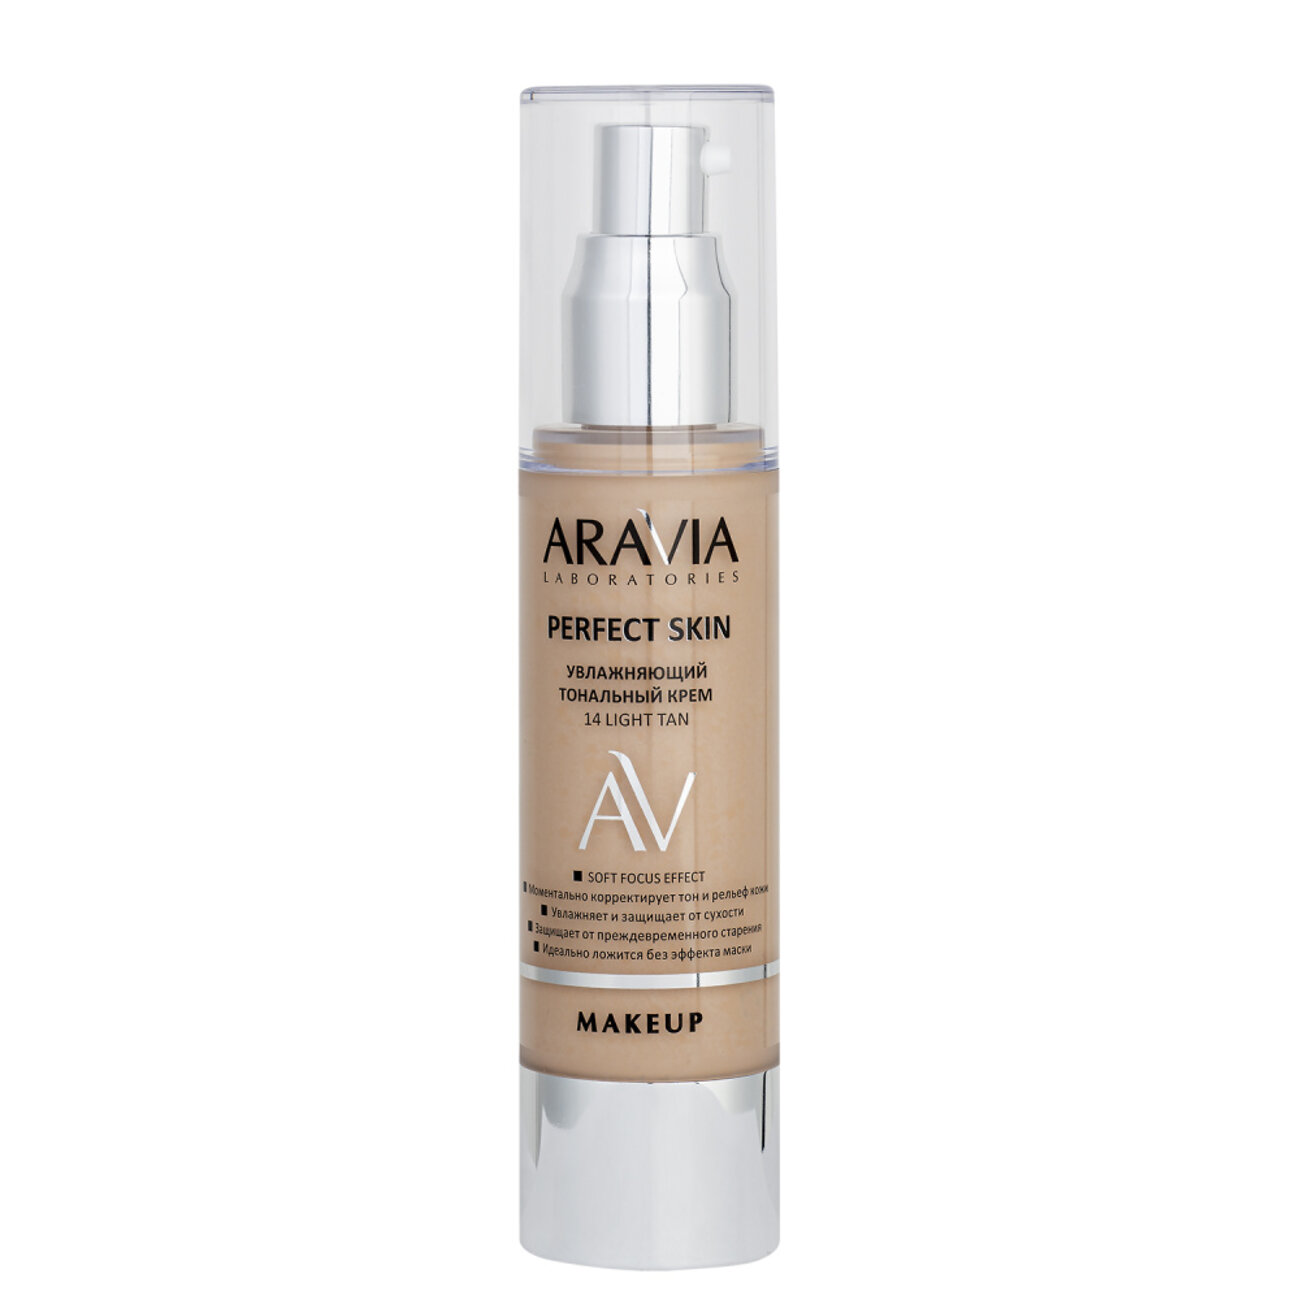 орг 15% ARAVIA Laboratories " Laboratories" Увлажняющий тональный крем 14 Light Tan Perfect Skin, 50 мл